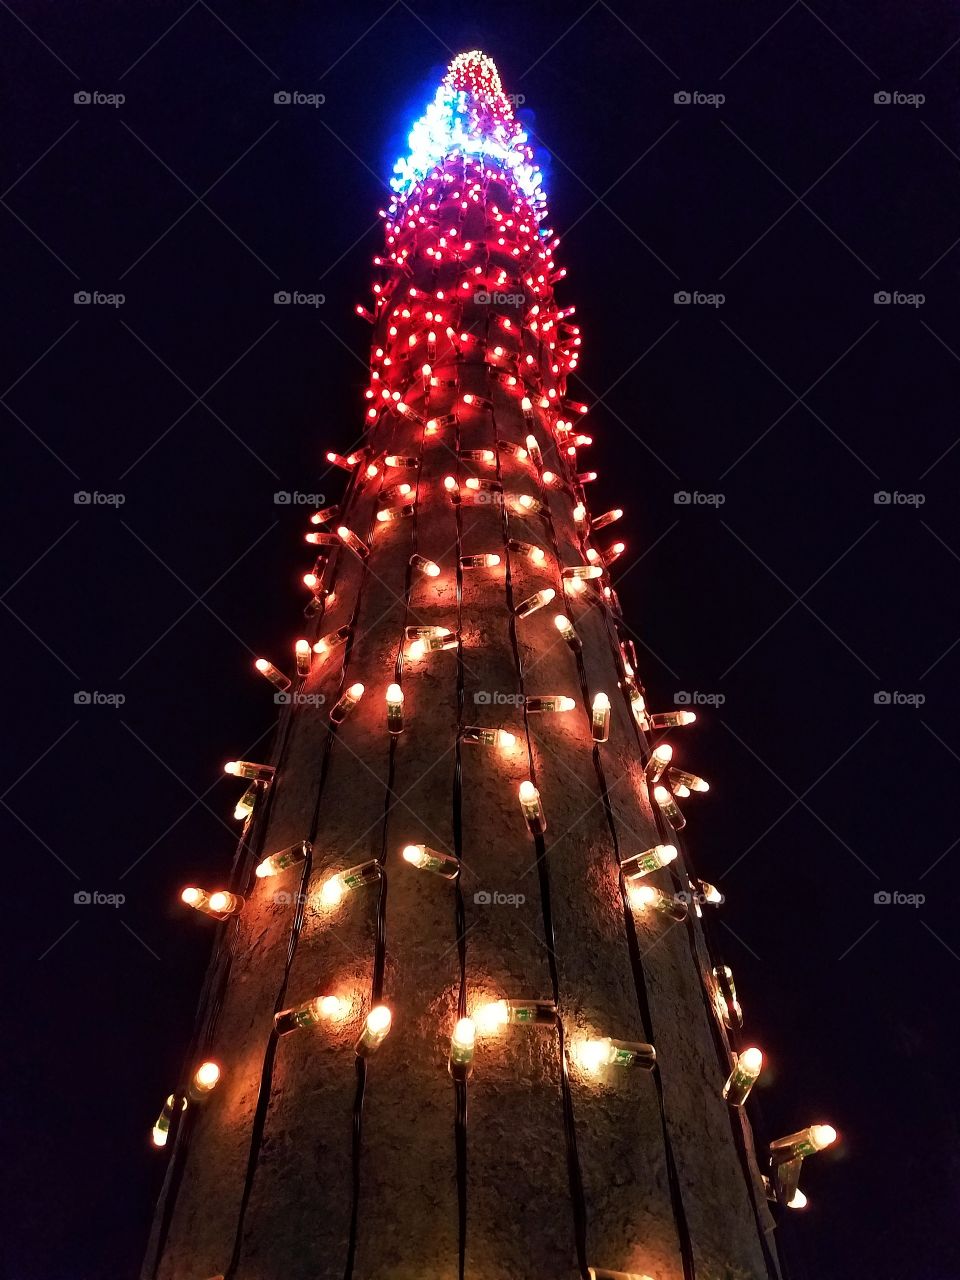 Christmas, lights, decorative,  string of lights, bright,  colorful, XMas, holidays, celebration